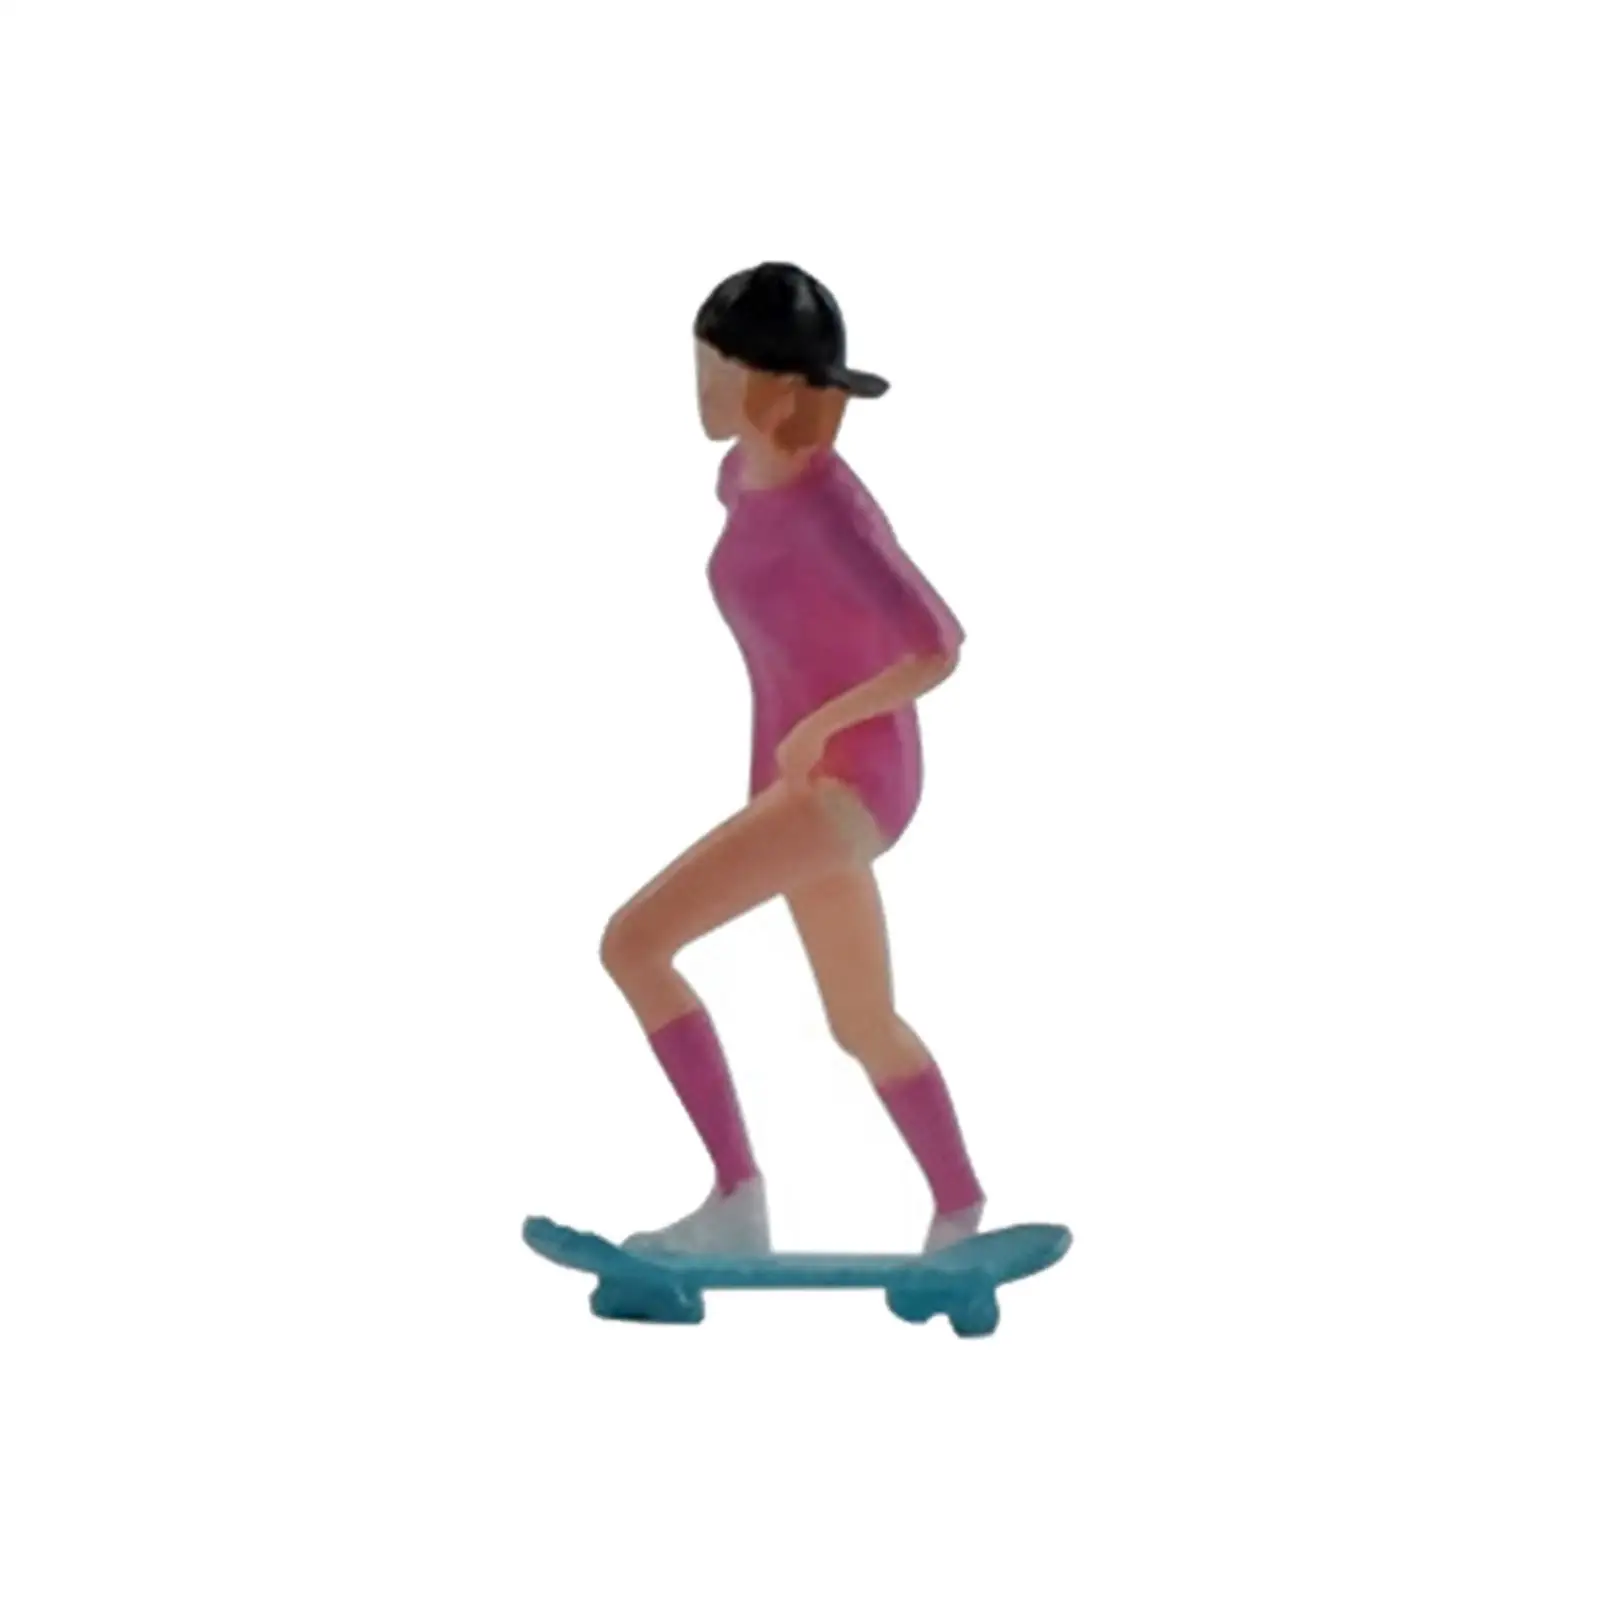 1/64 Diorama Figures Model Skateboard Girl Miniature People for Layout Decor